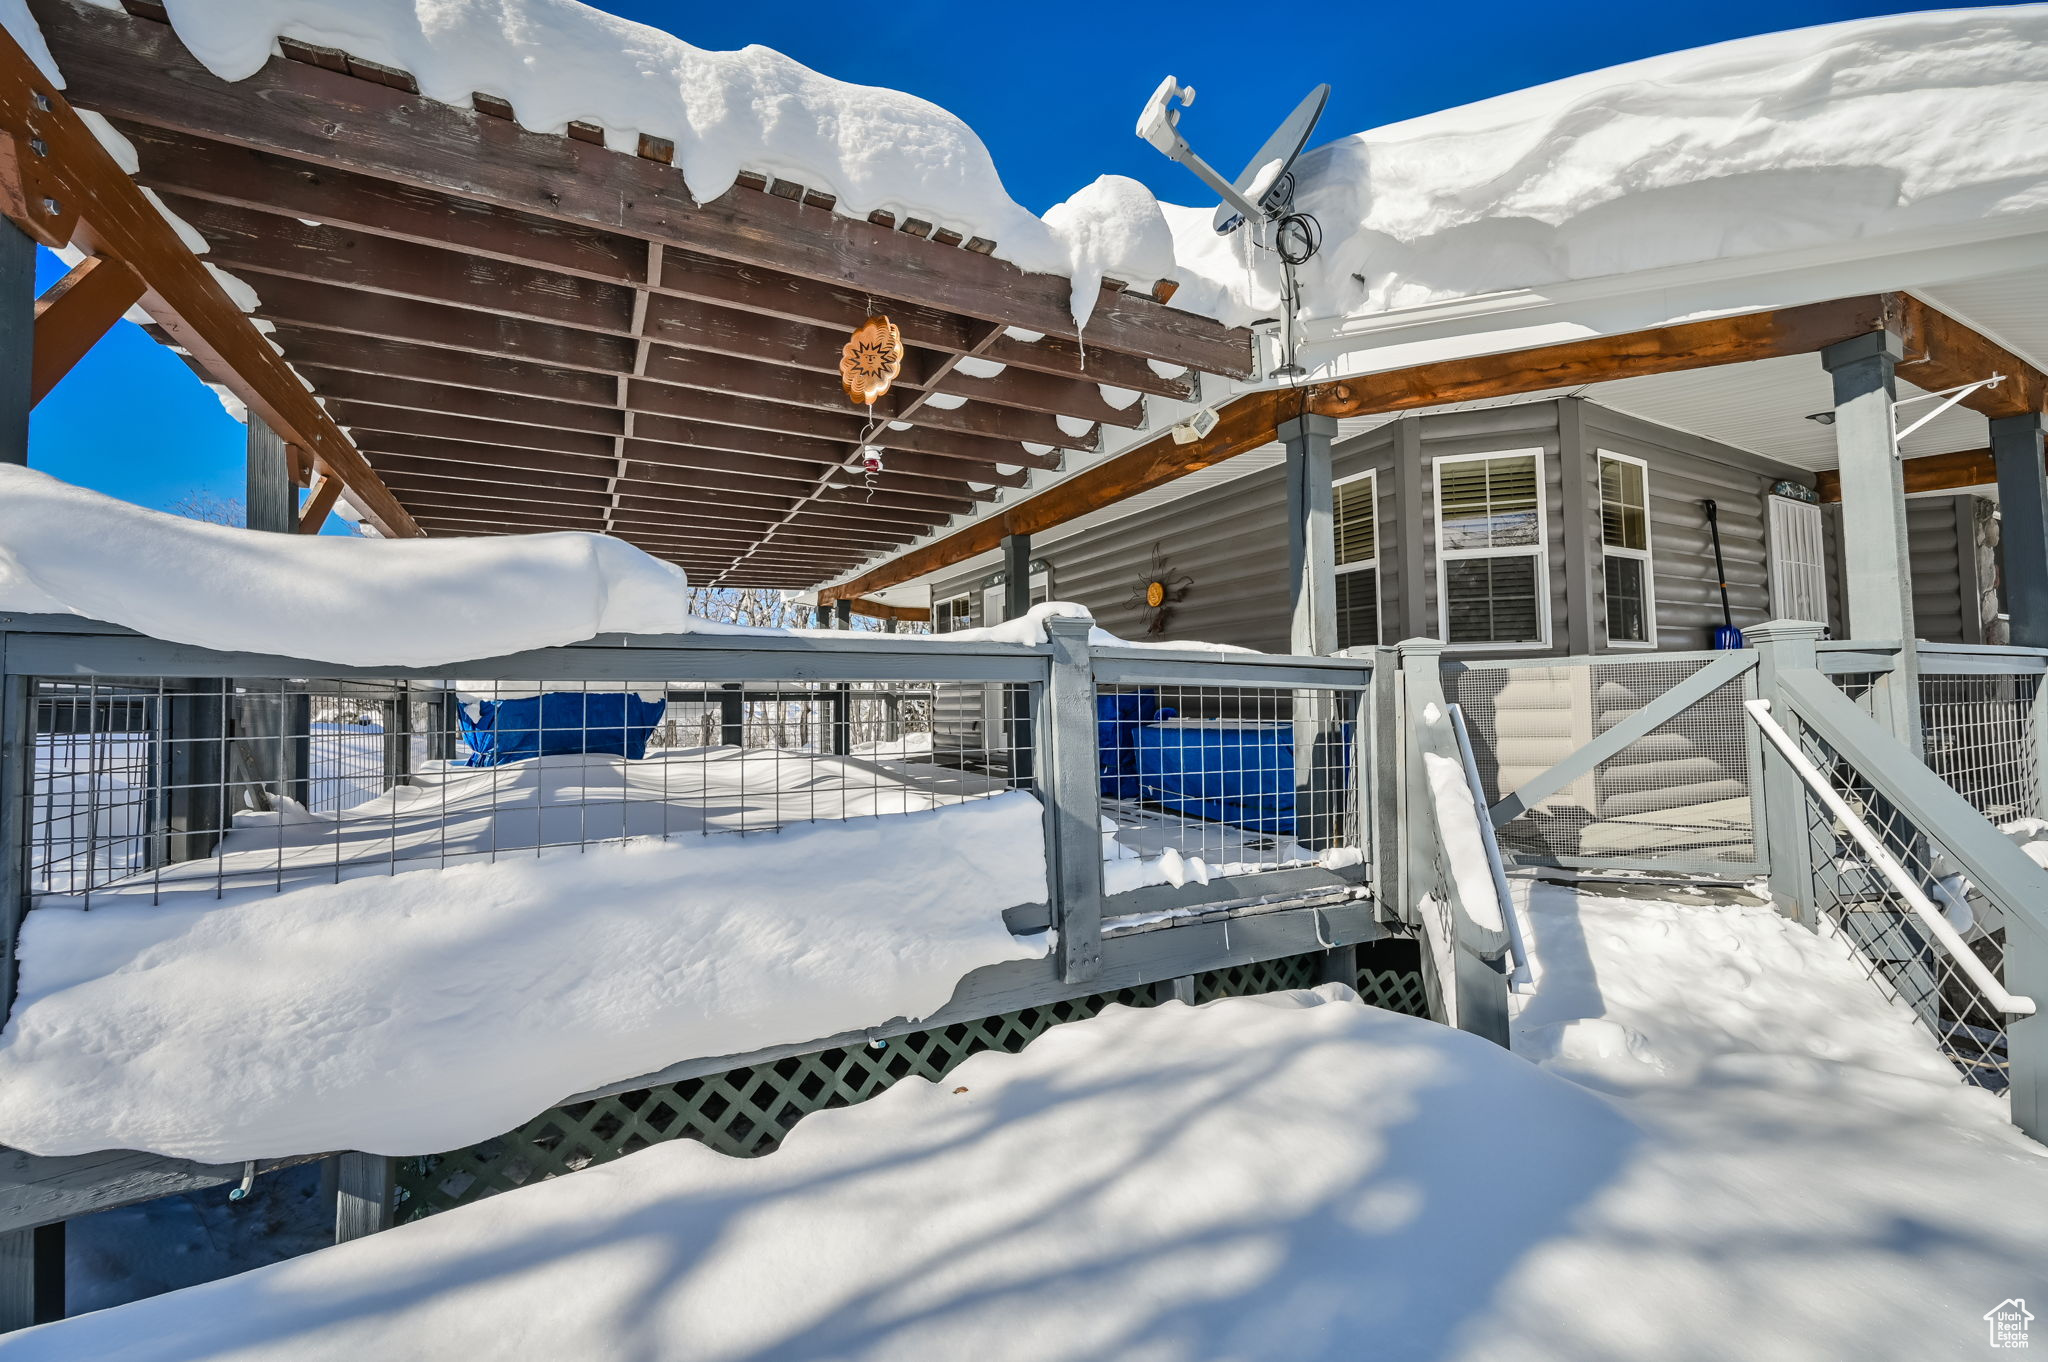 Snow covered patio featuring a pergola